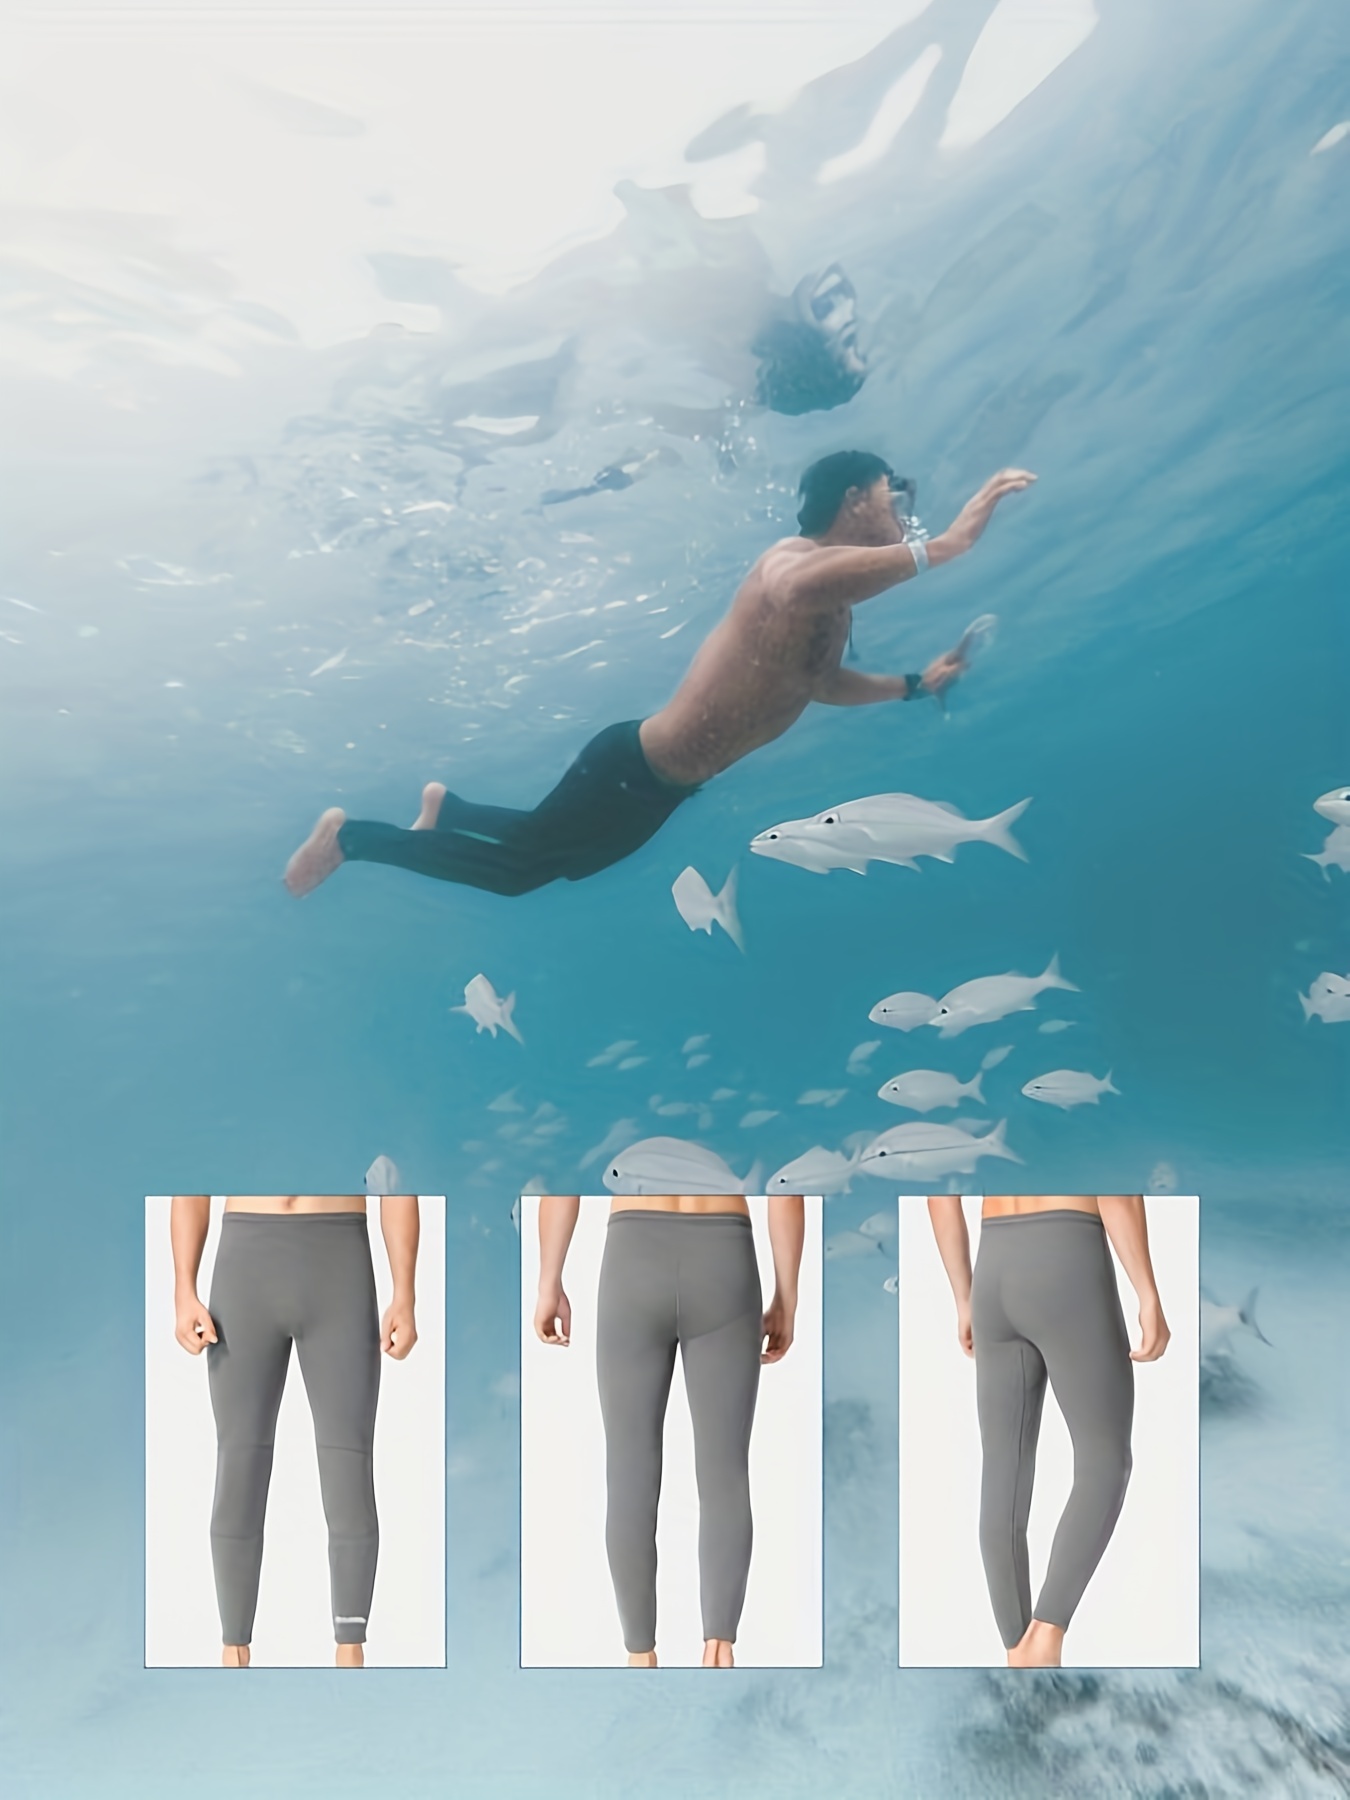 Mens Wetsuit Pants Neoprene Trousers for Snorkeling Swimming Scuba